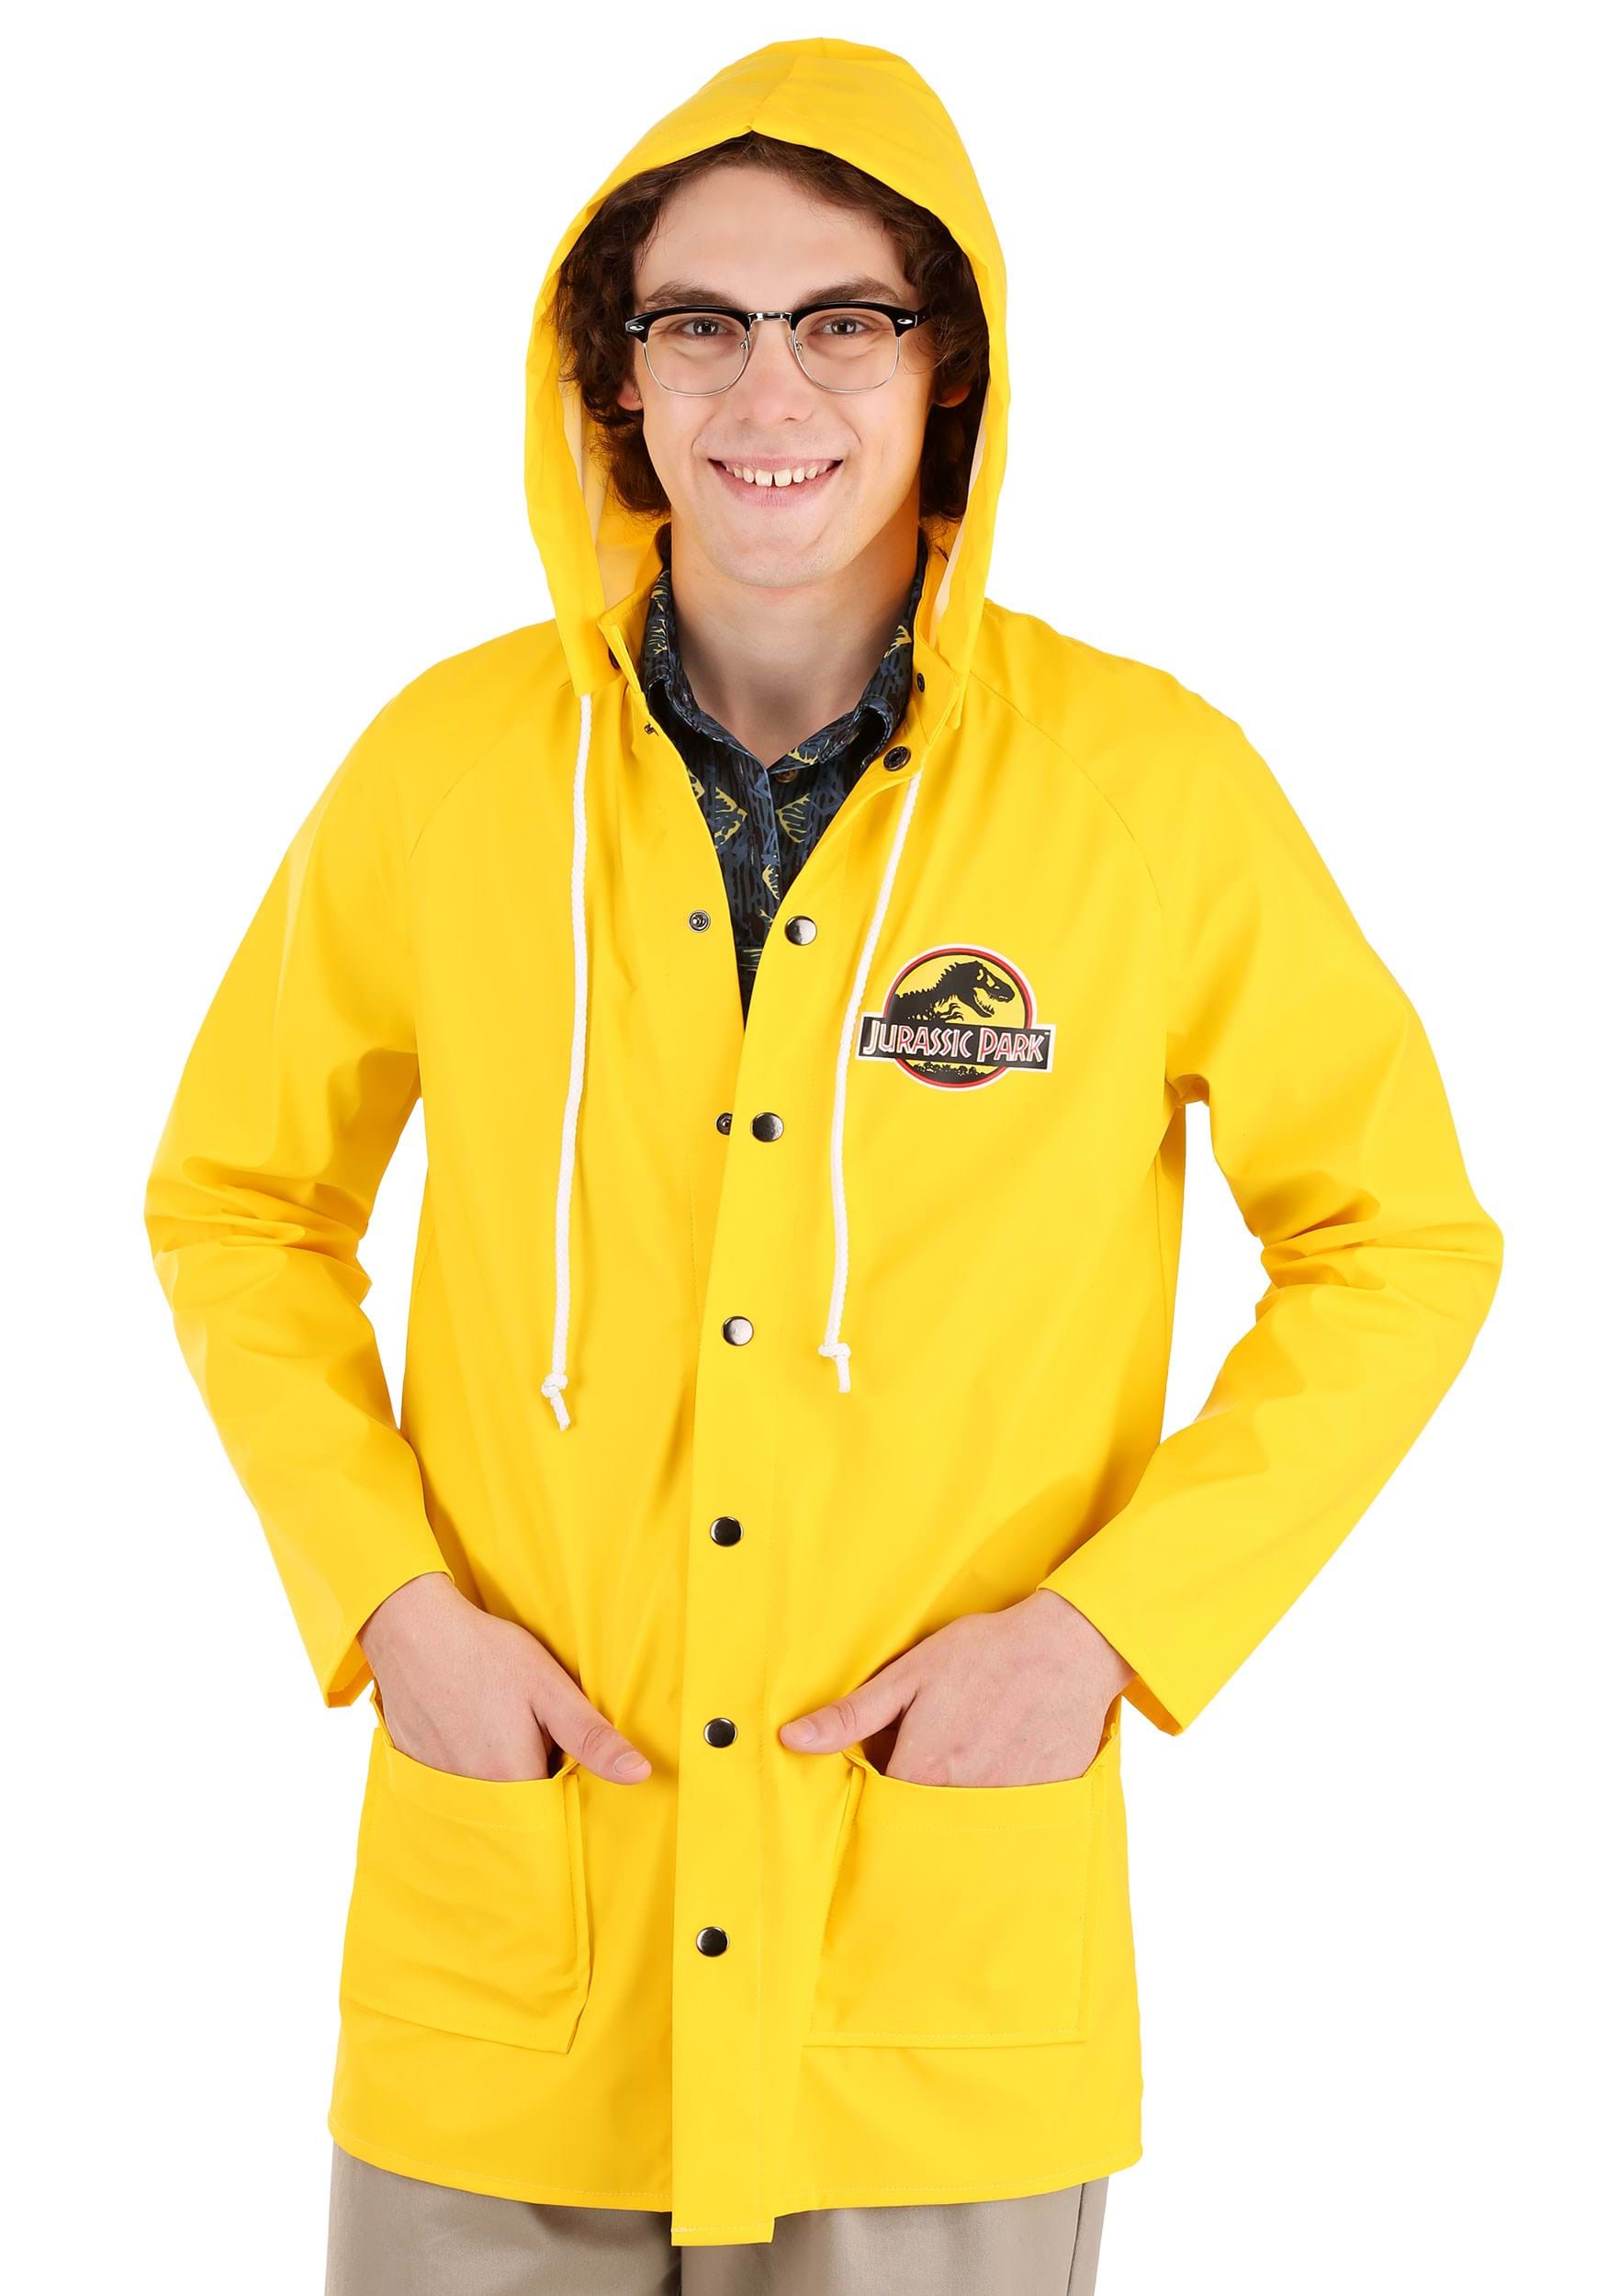 Adult Jurassic Park Yellow Raincoat Costume | Jurassic Park Costumes